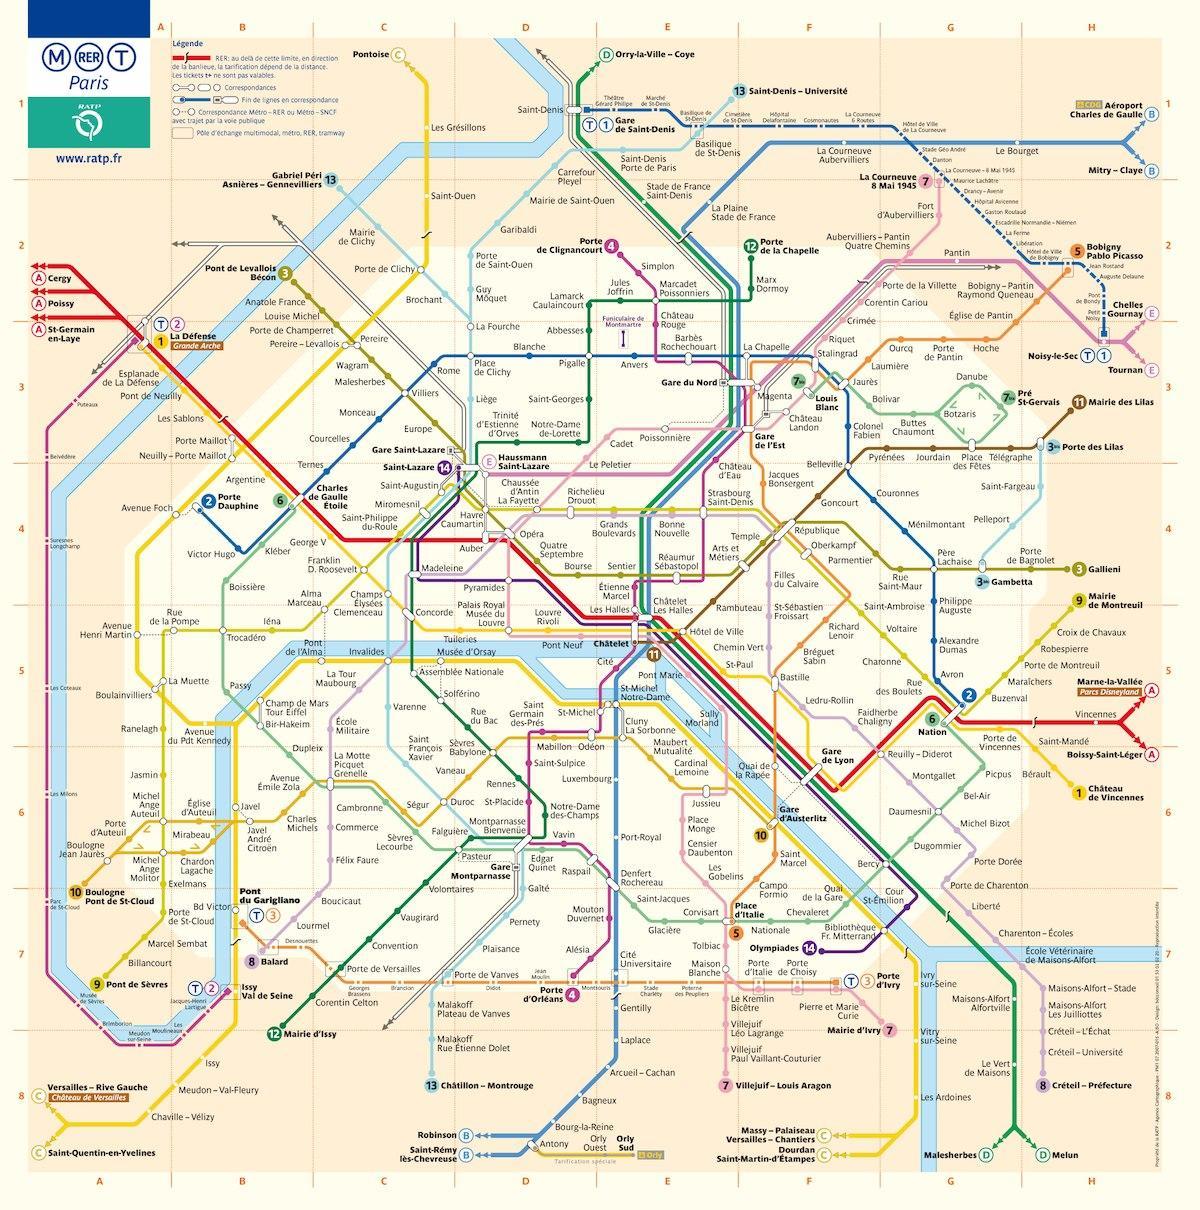 washington dc metro map with streets